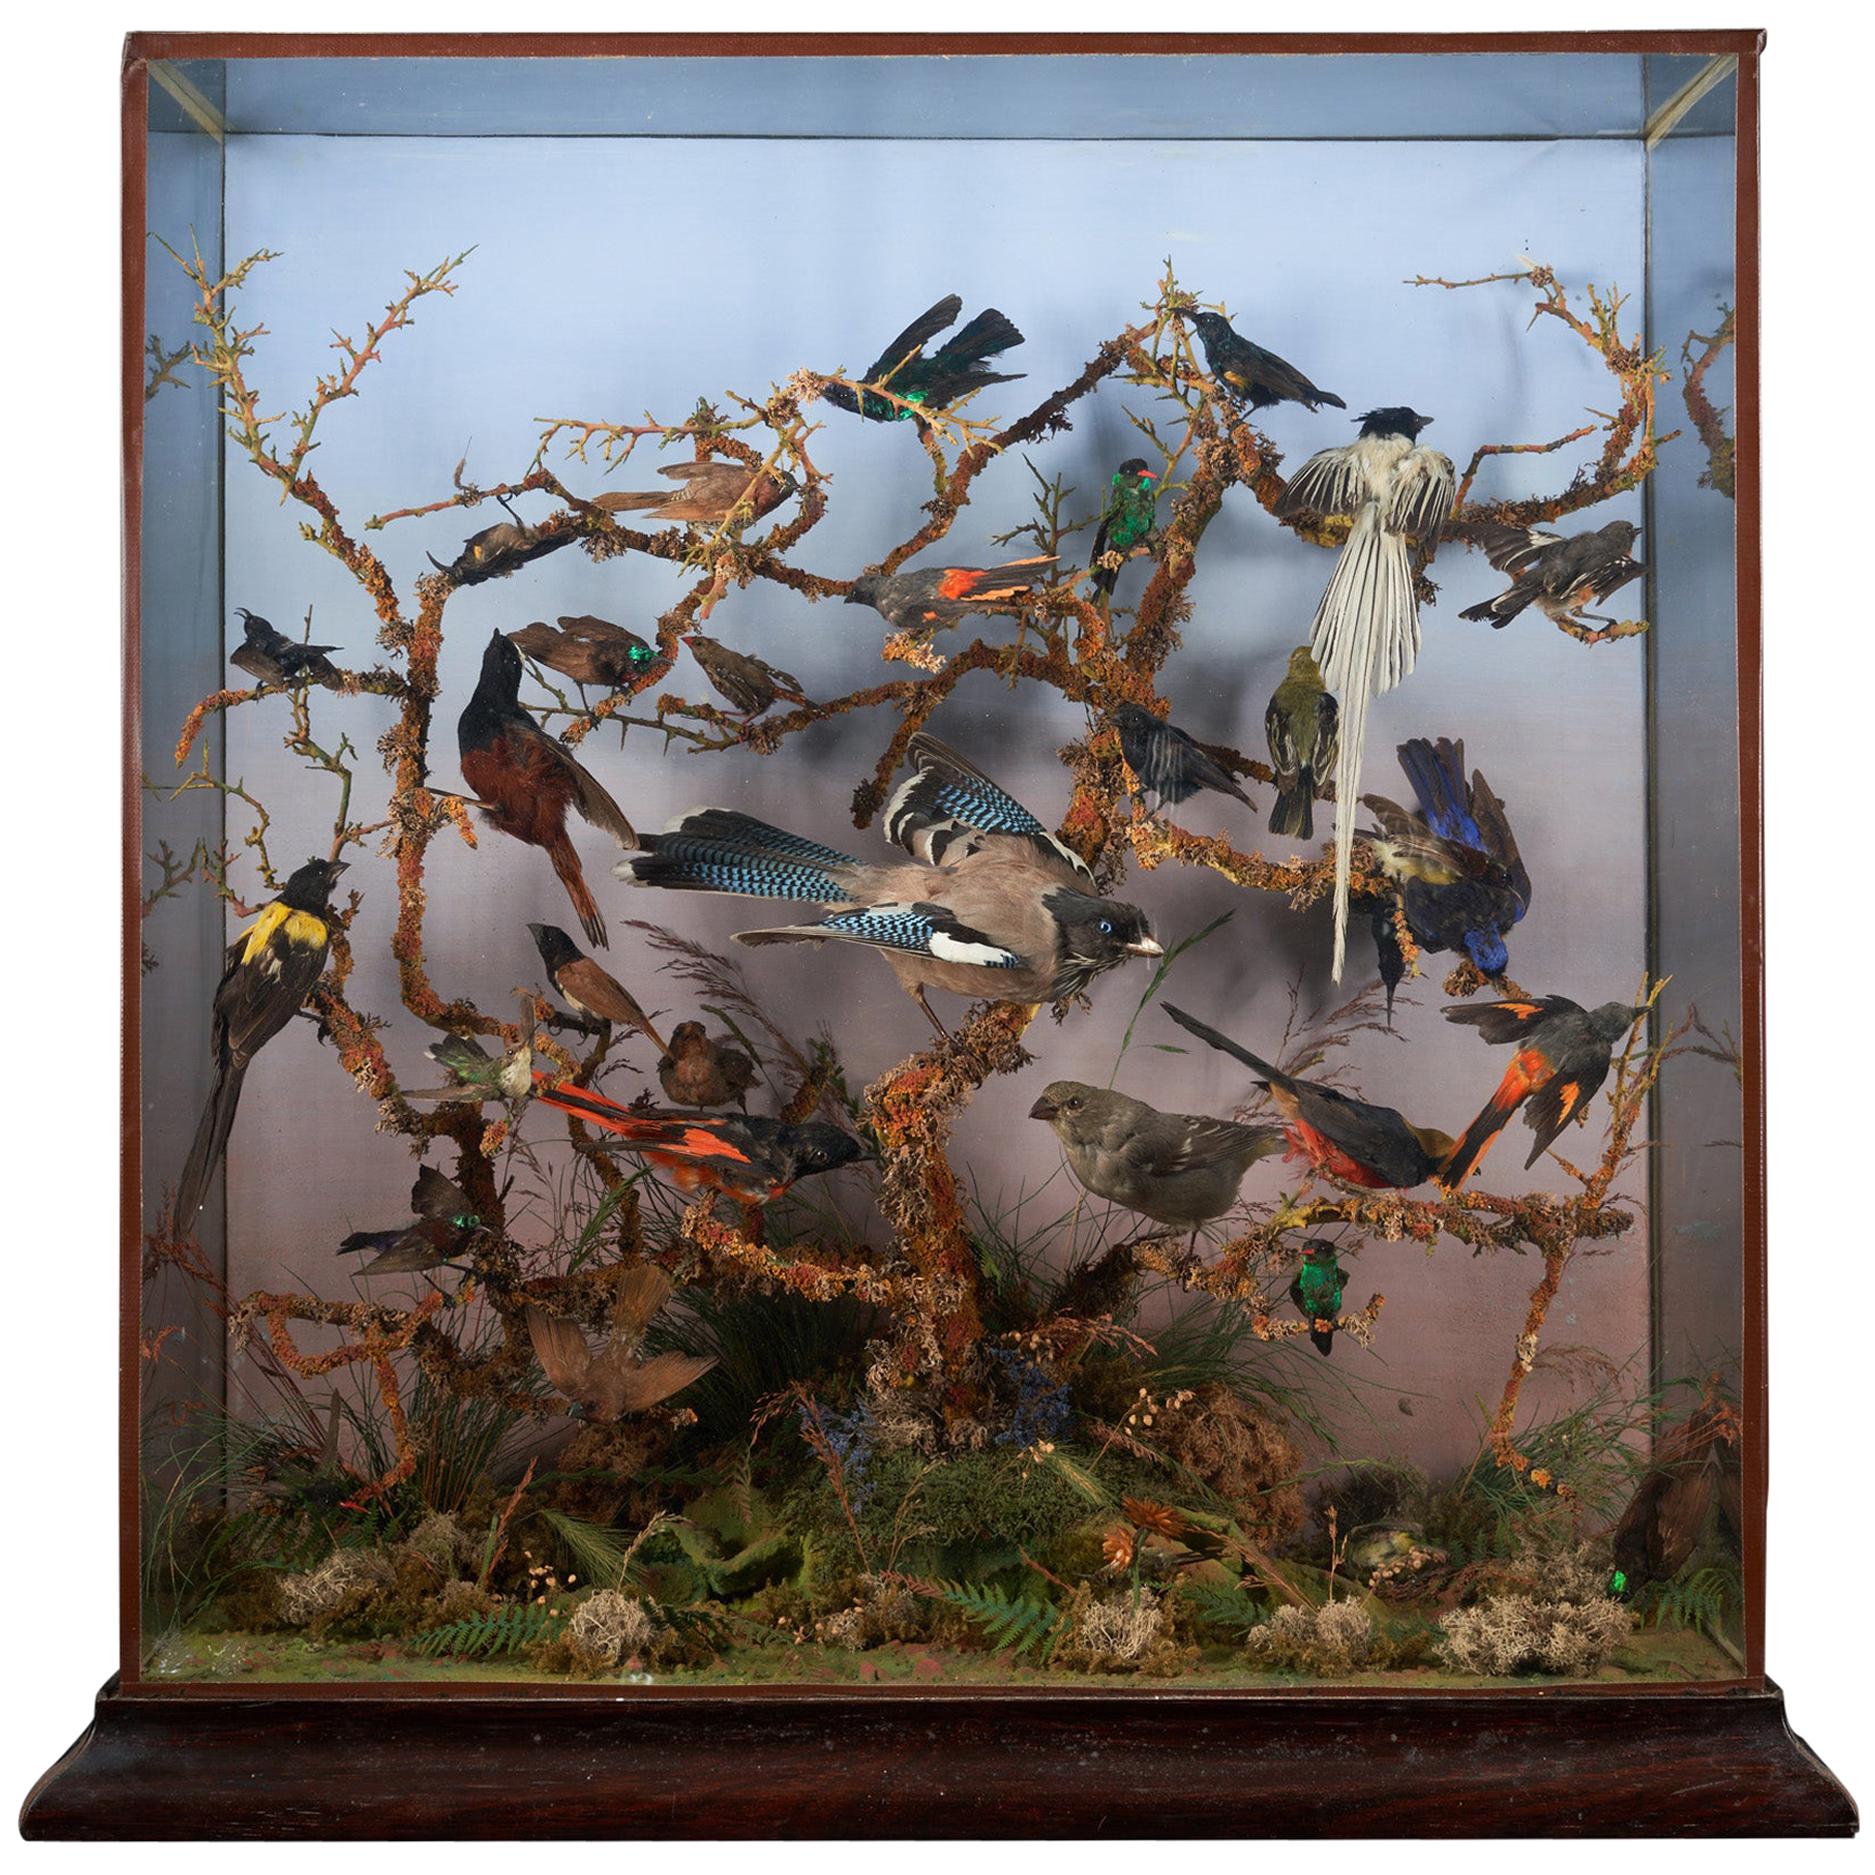 19th Century Taxidermy Ornithological Showcase "Paradise" by Roland Ward